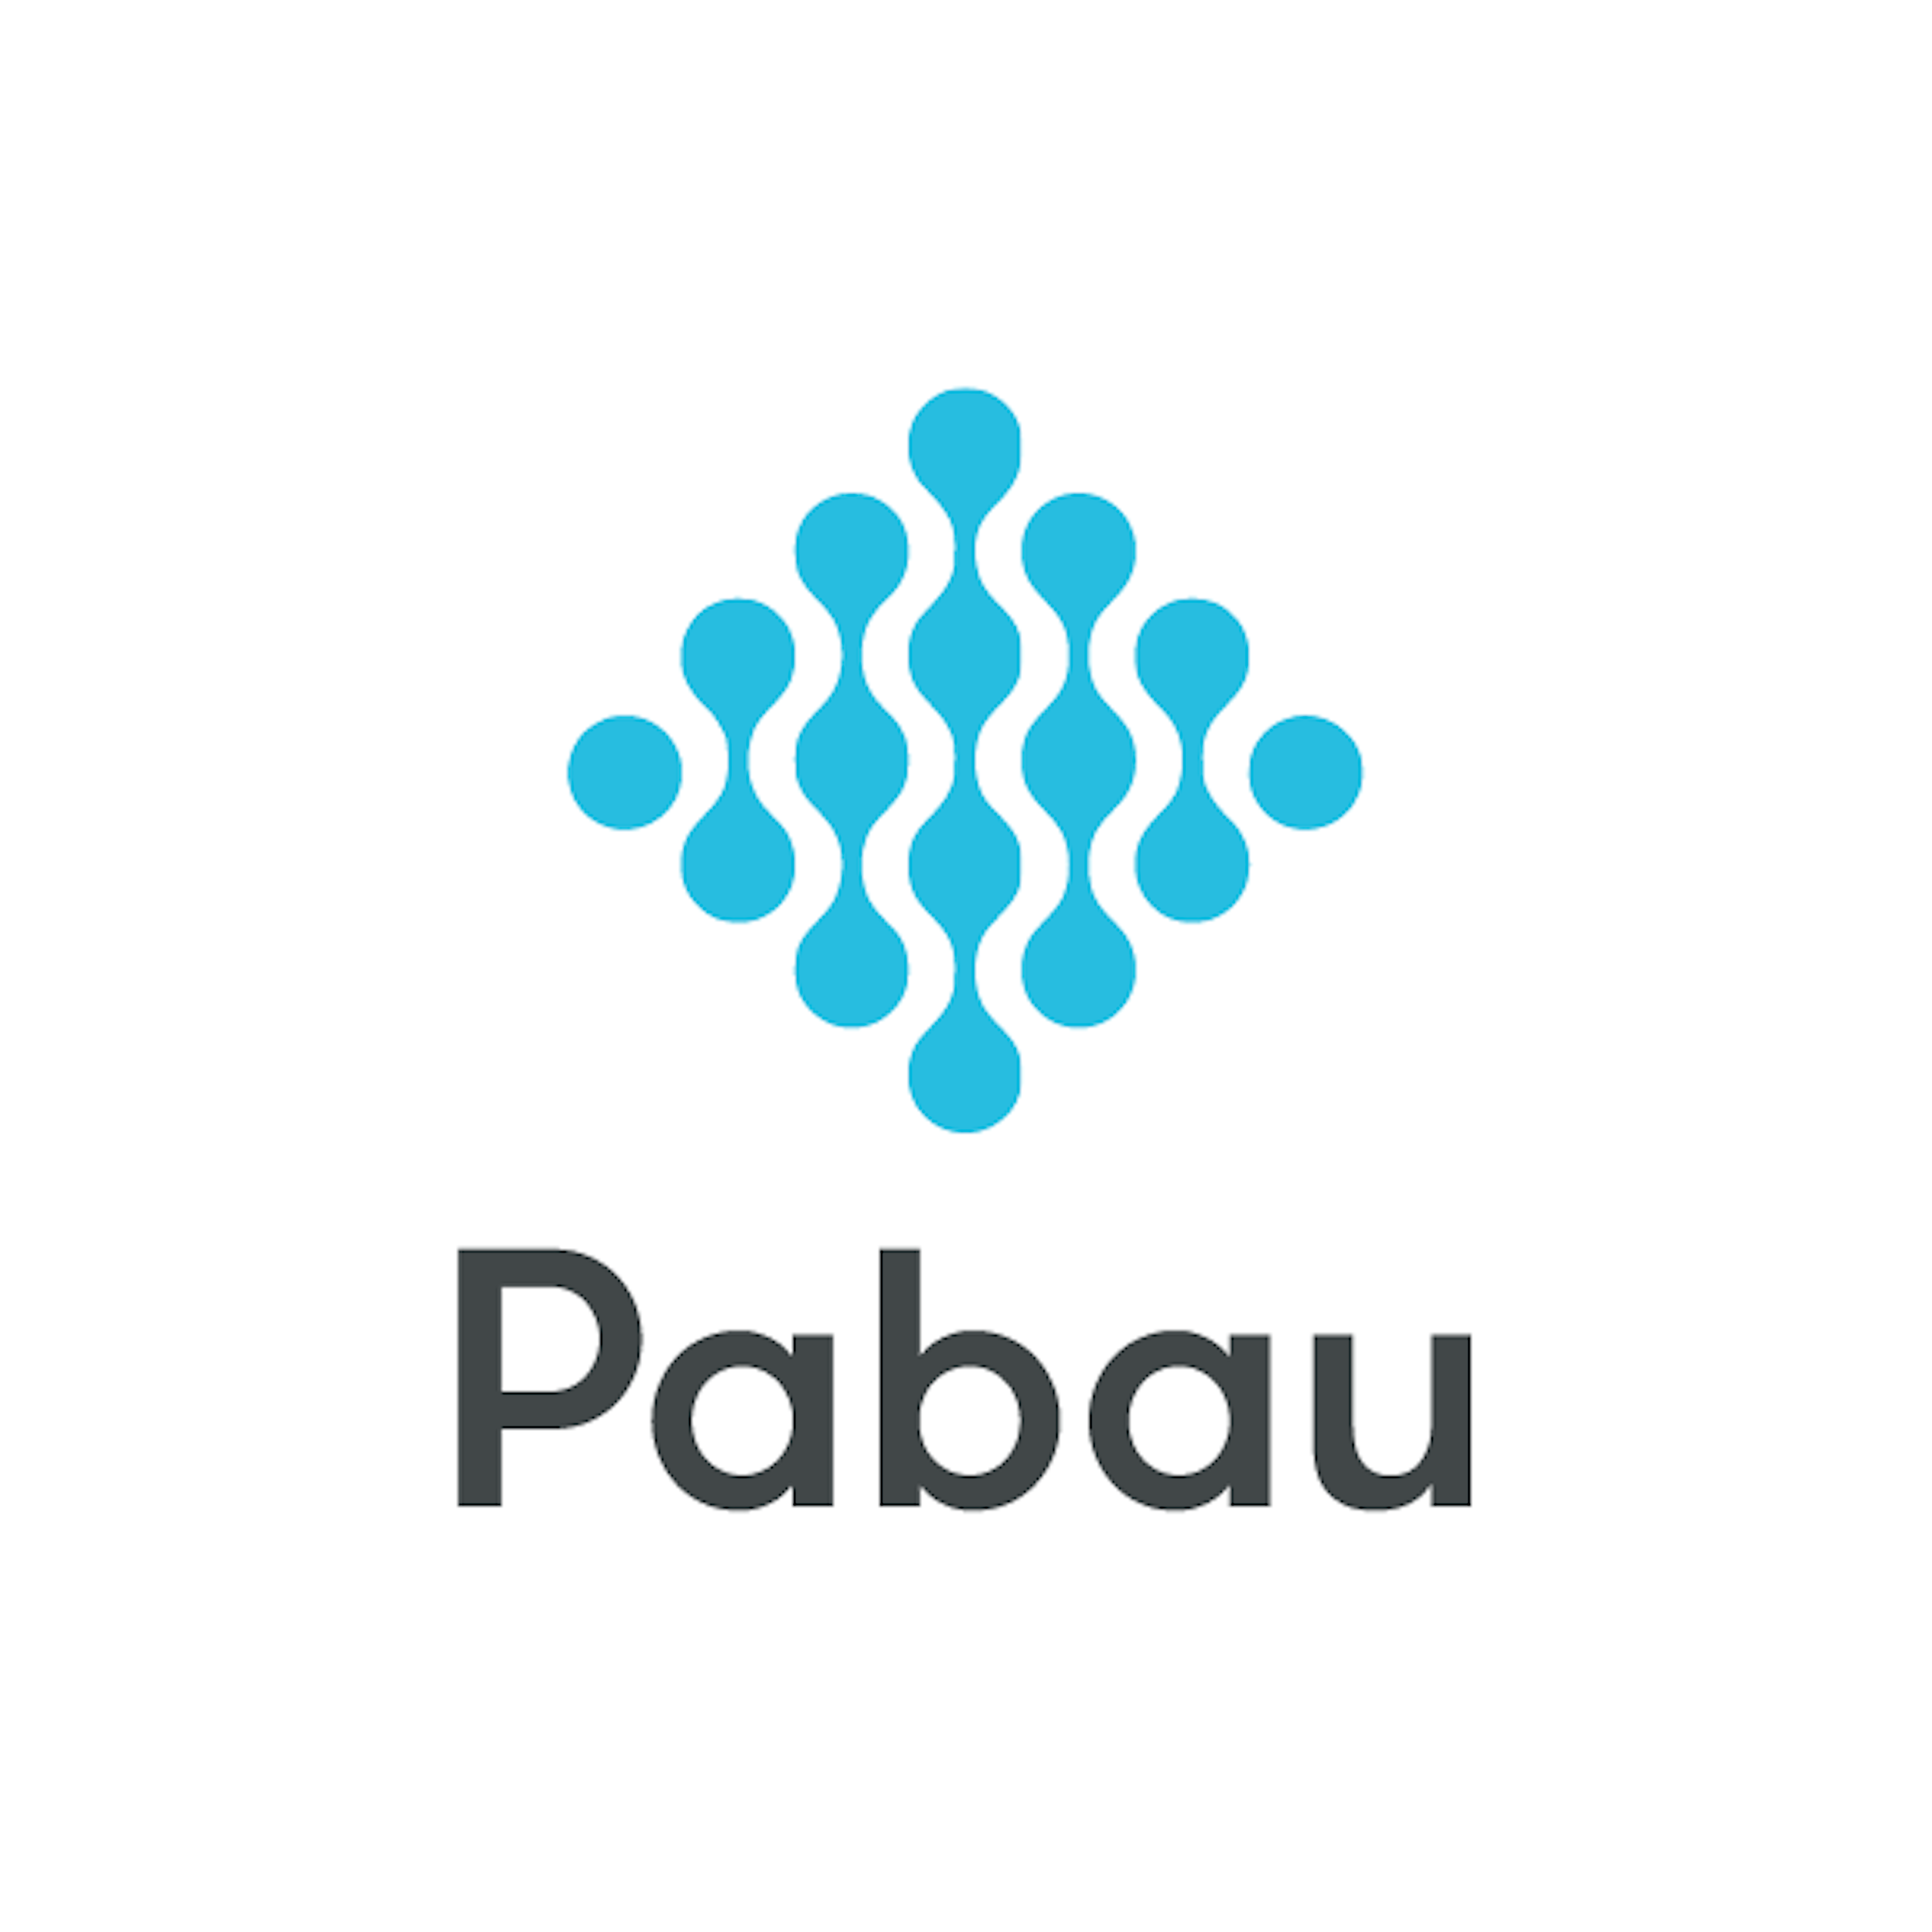 Pabau Logo